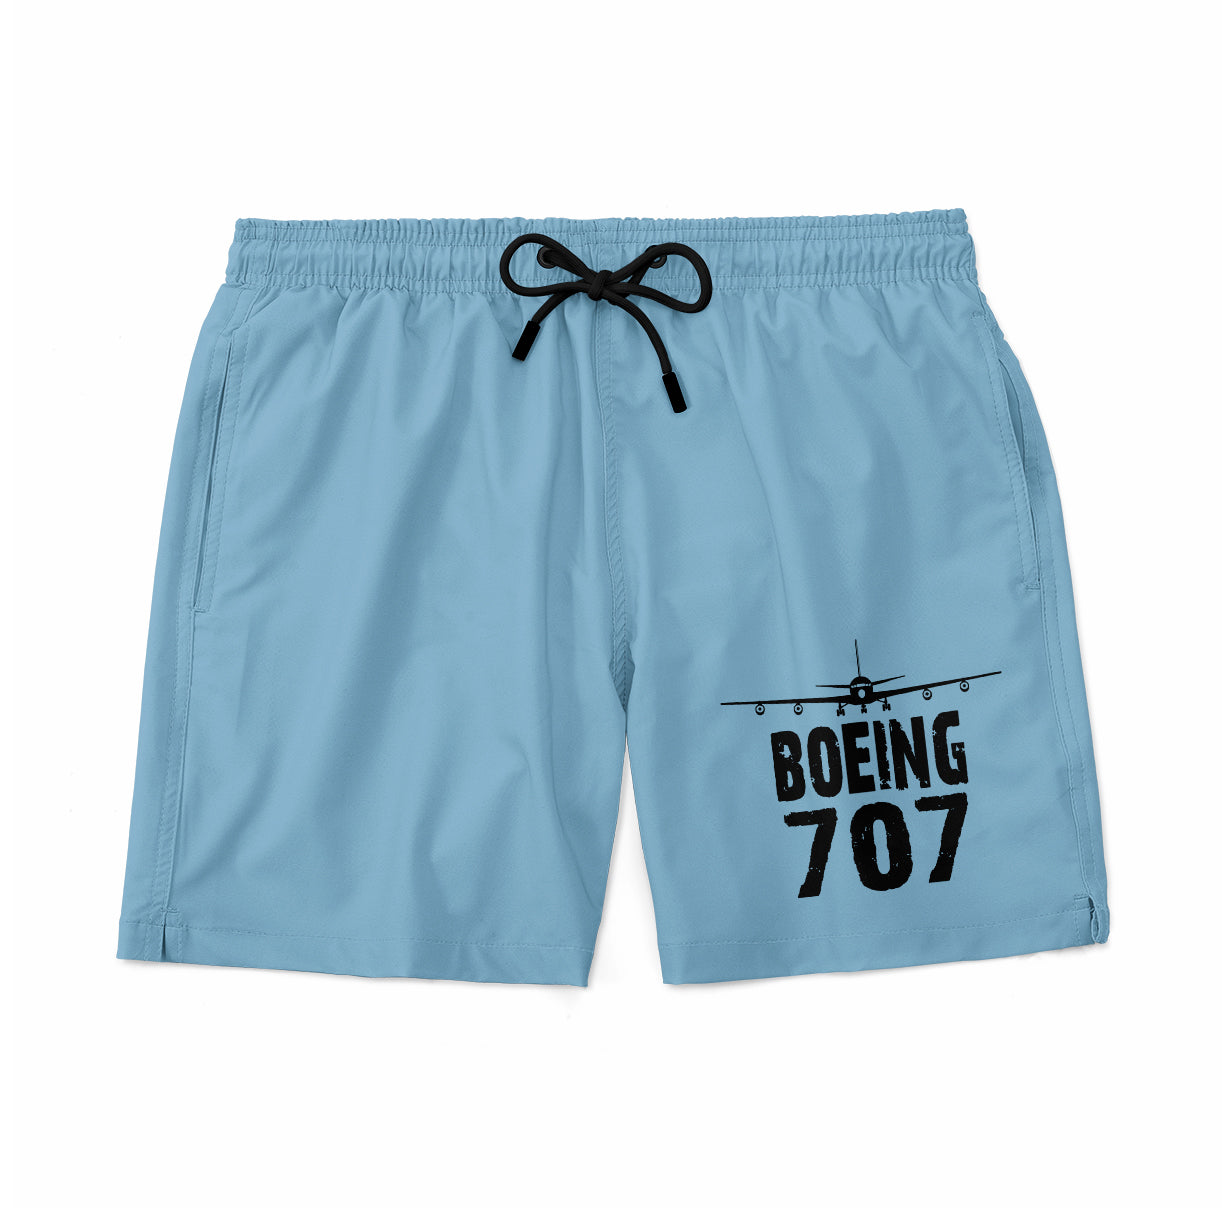 Boeing 707 & Plane Designed Swim Trunks & Shorts